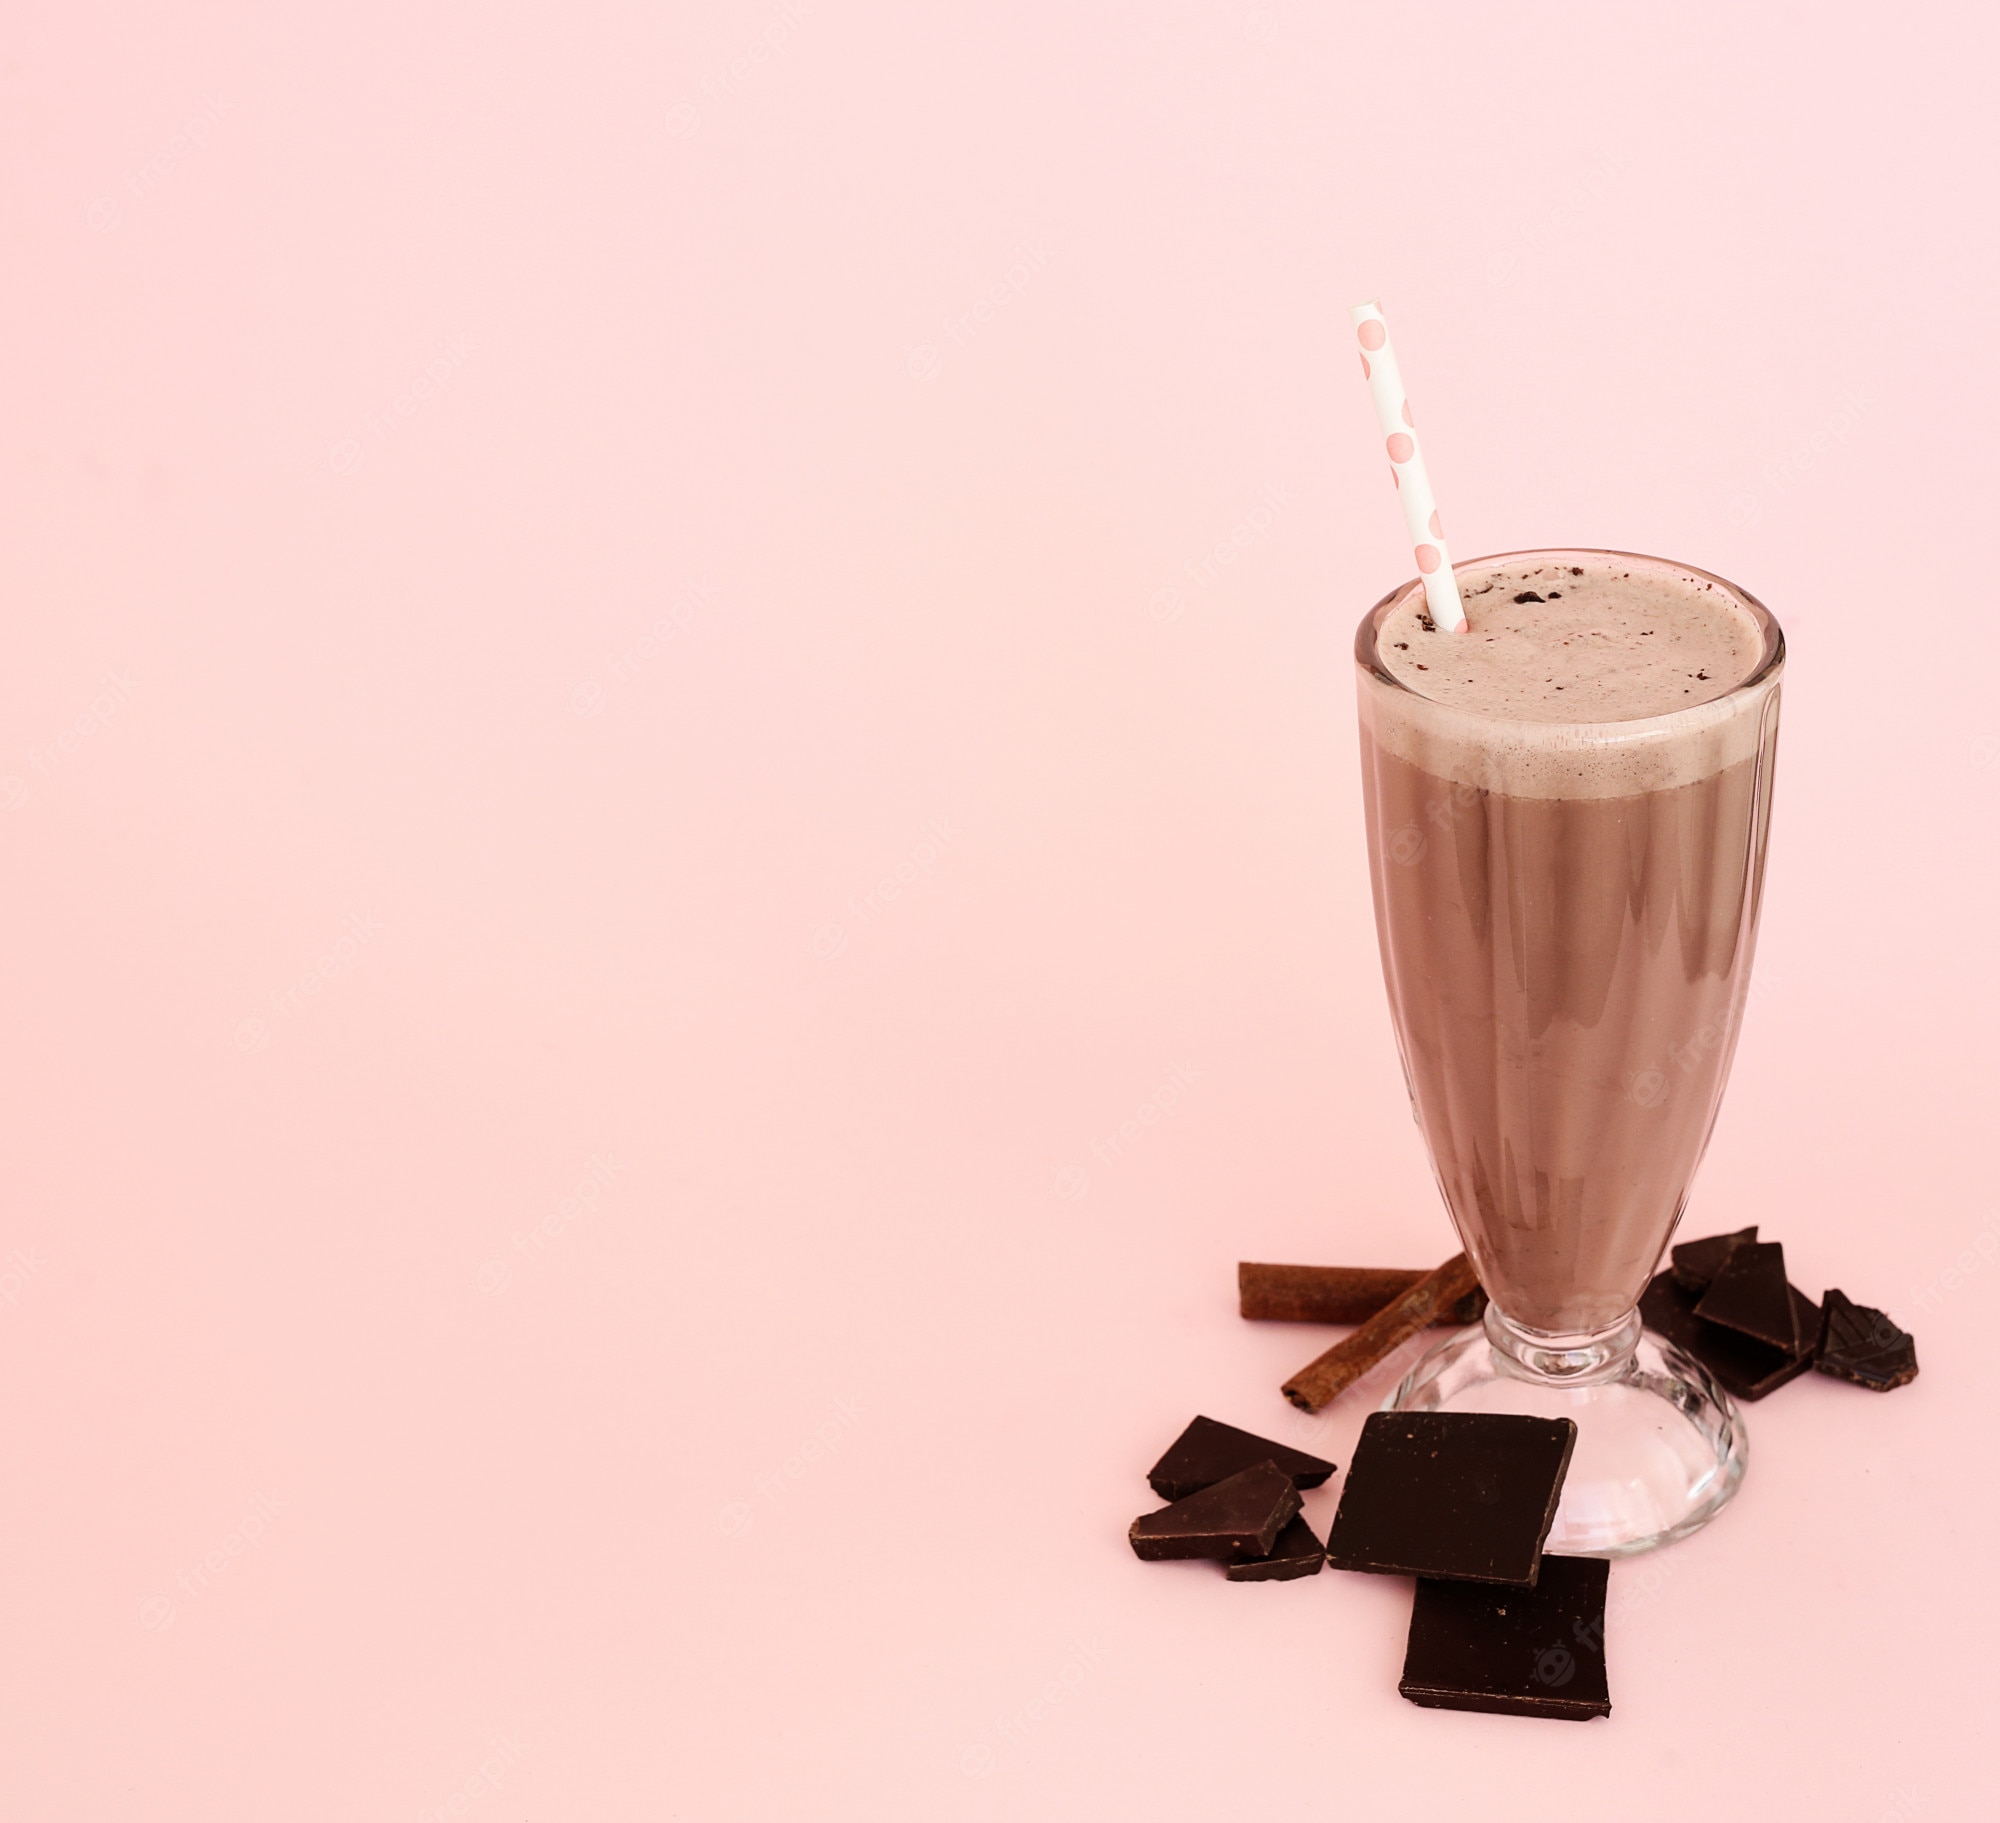 Chocolate milkshake Image. Free Vectors, & PSD